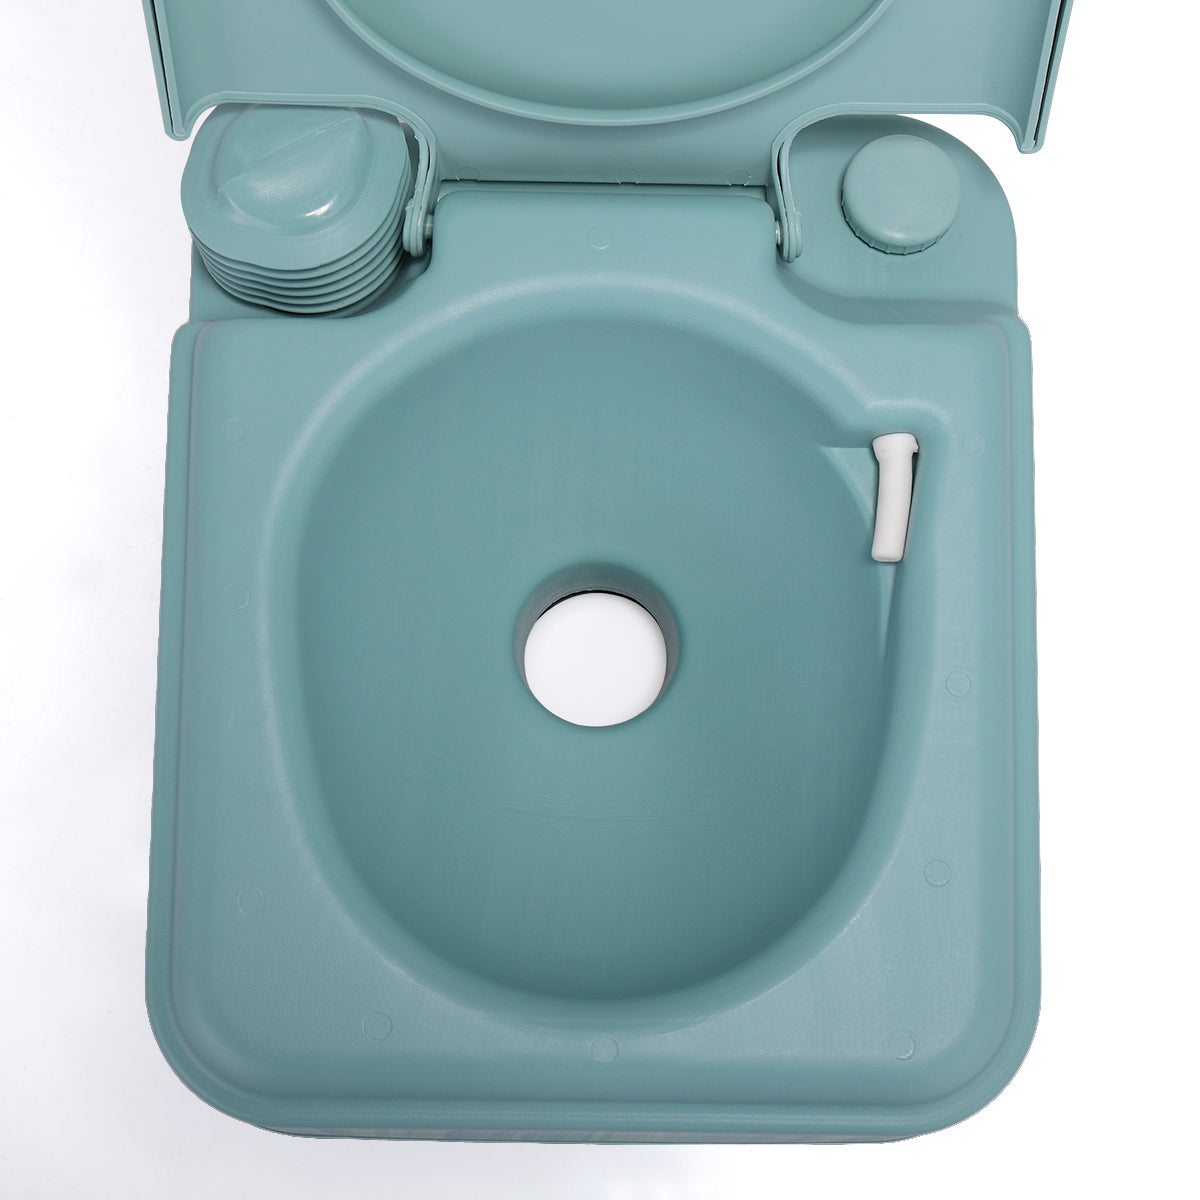 5.3 Gallon 20L Flush Outdoor Indoor Travel Camping Portable Toilet